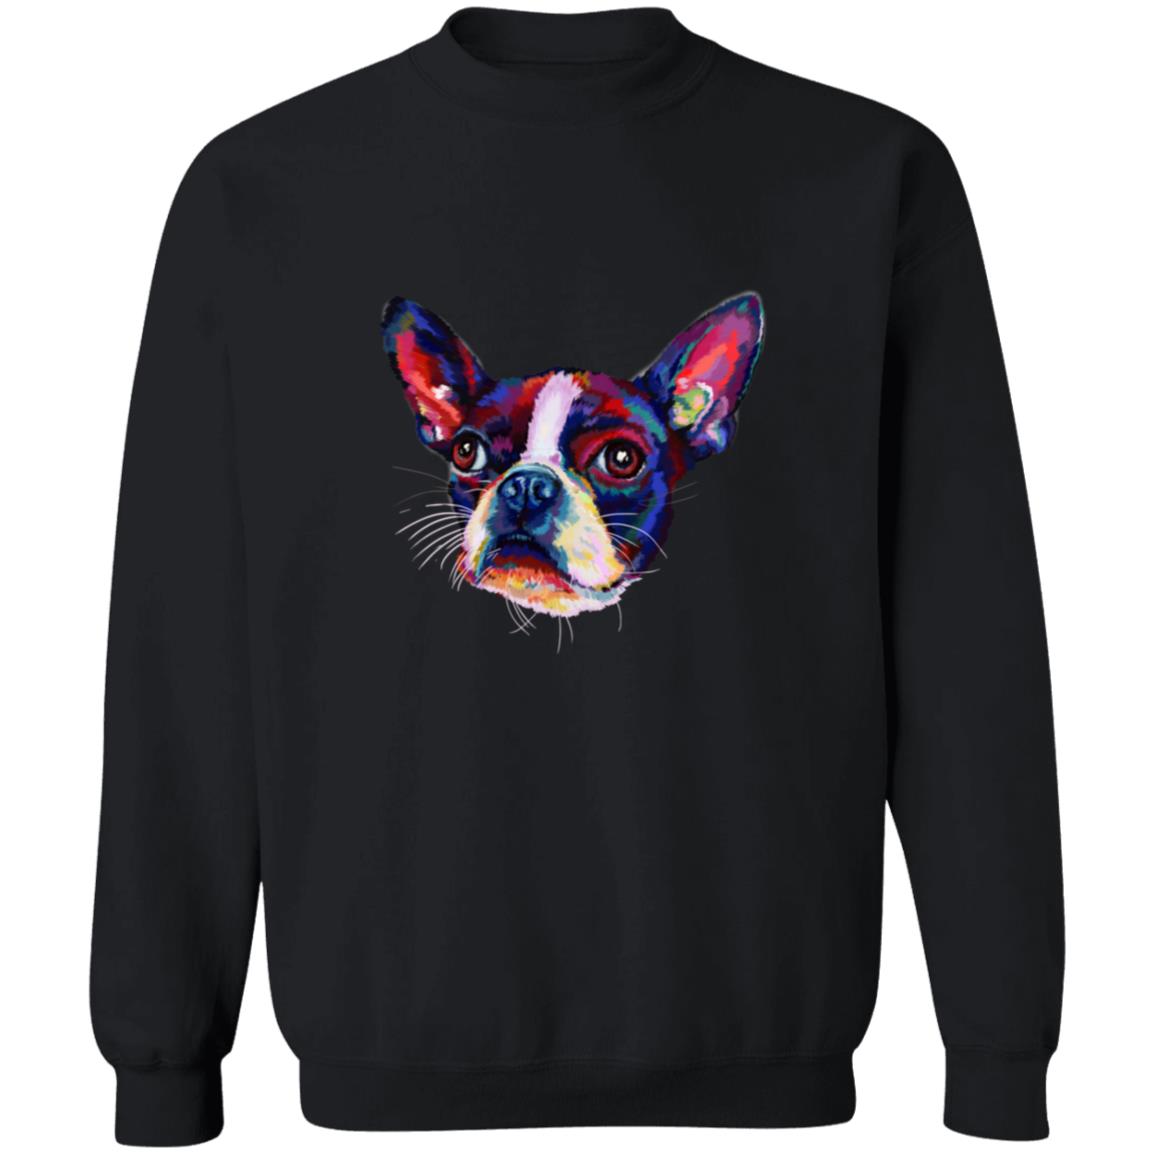 Abstract Boston terrier dog Unisex Crewneck Sweatshirt with expressive splashes-Family-Gift-Planet